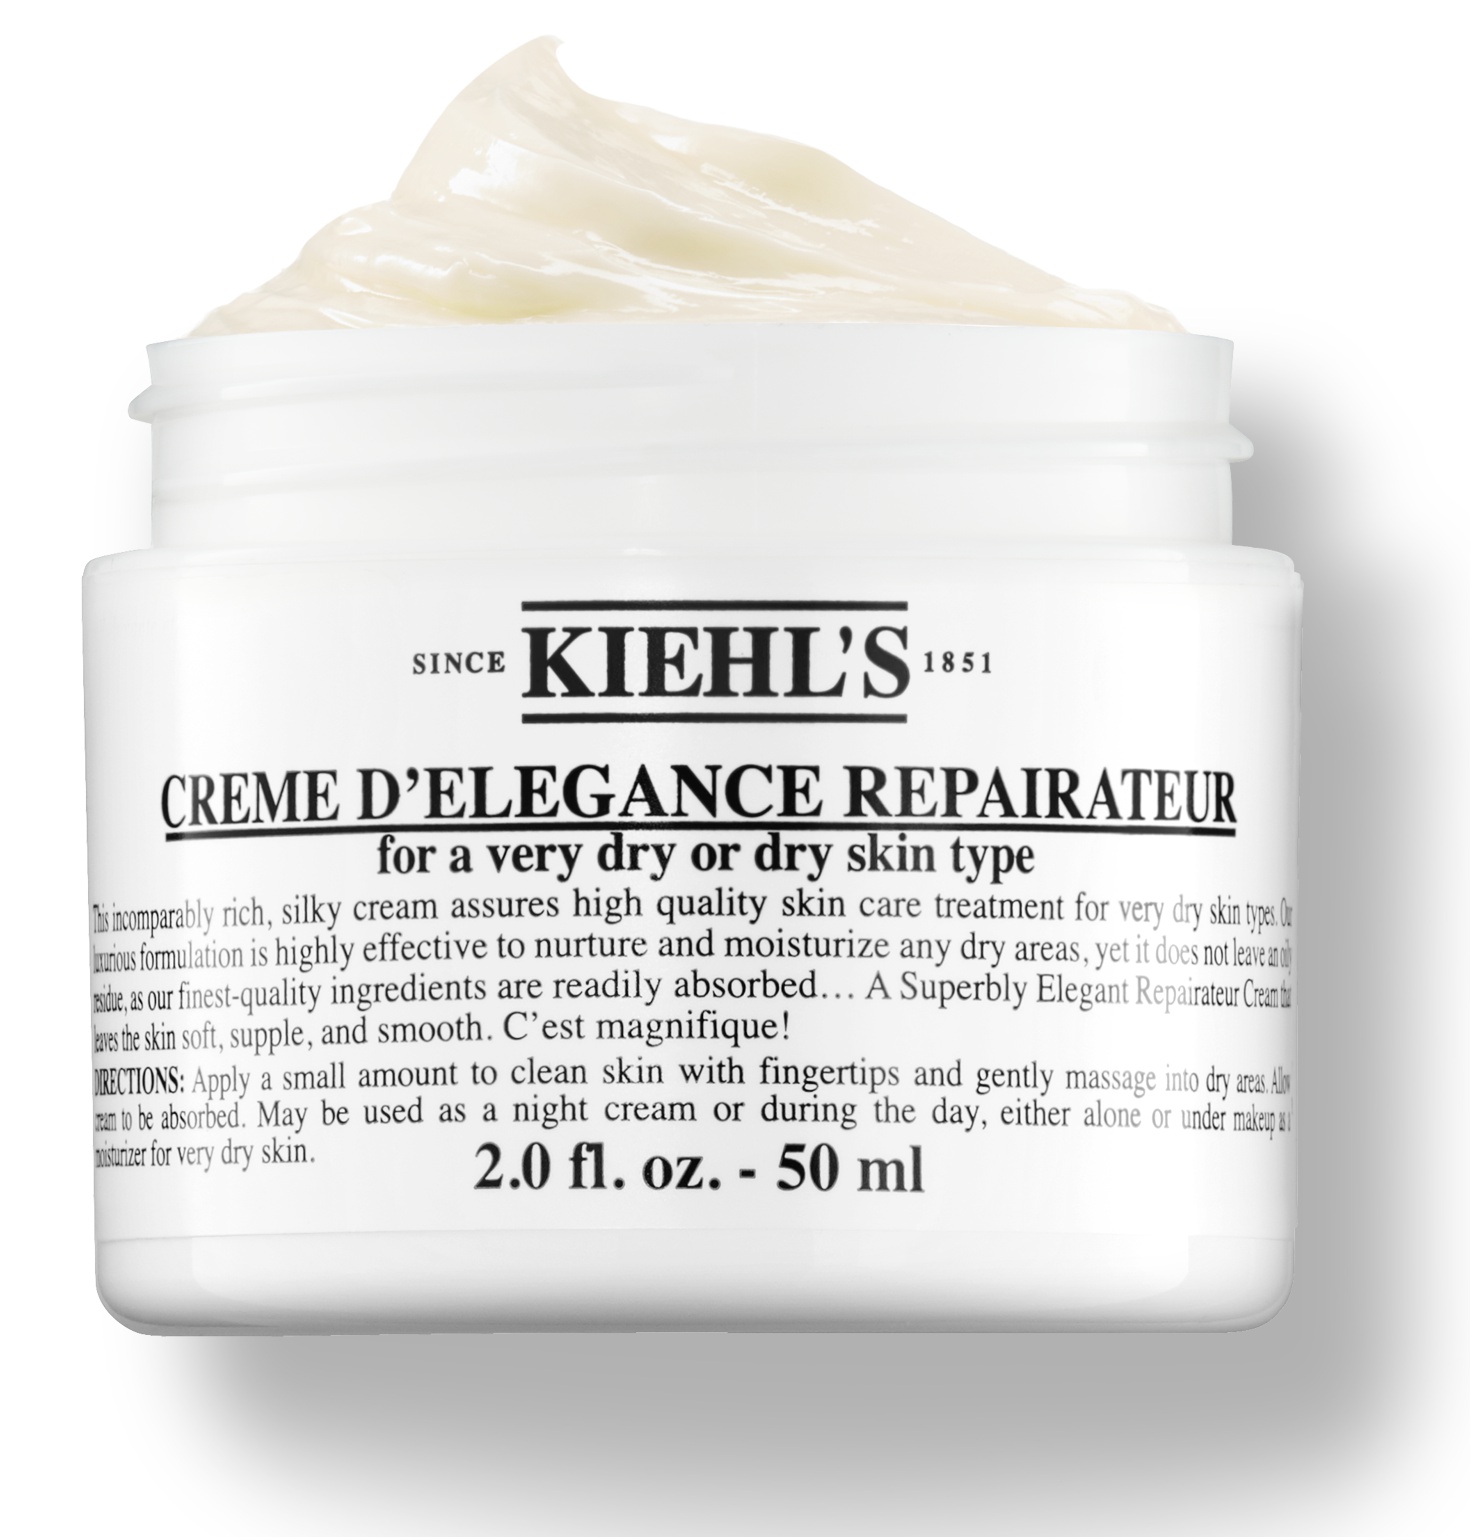 Kiehl’s Creme D’elegance Repairateur